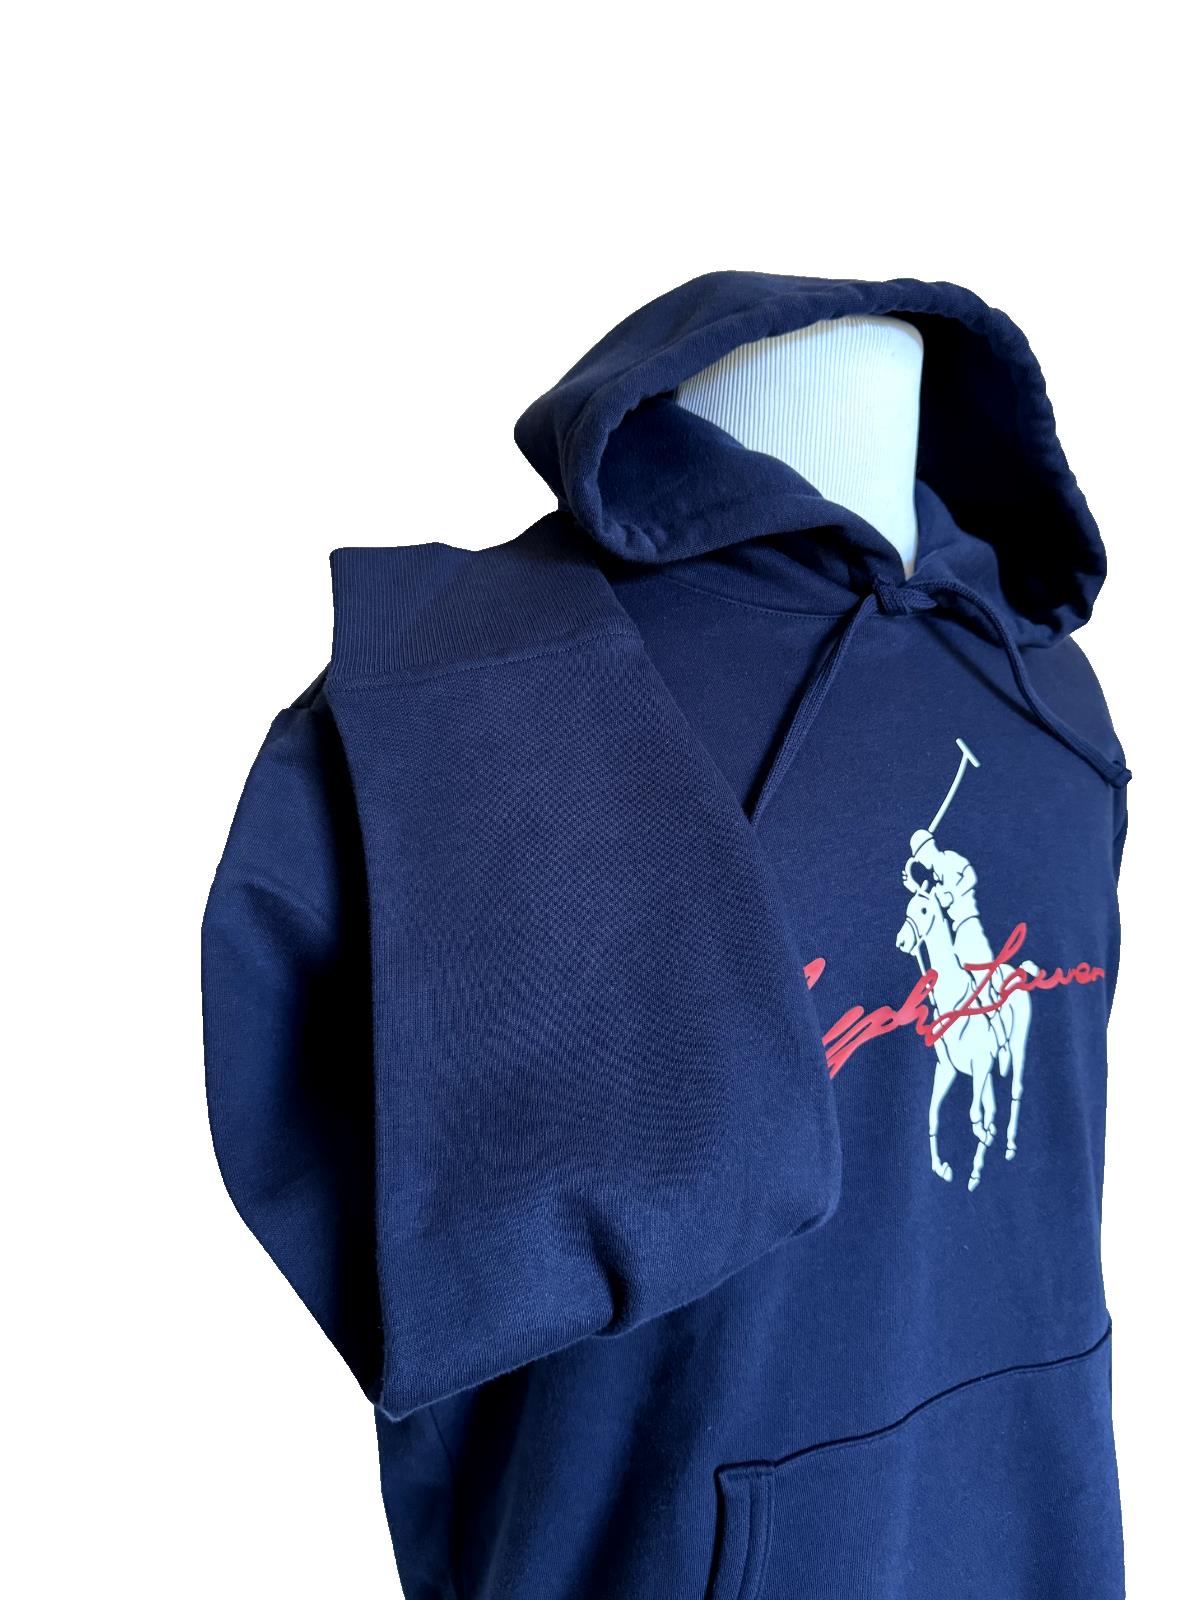 NWT $198 Polo Ralph Lauren Signature Big Pony Long Sleeve Fleece Hoodie Navy L